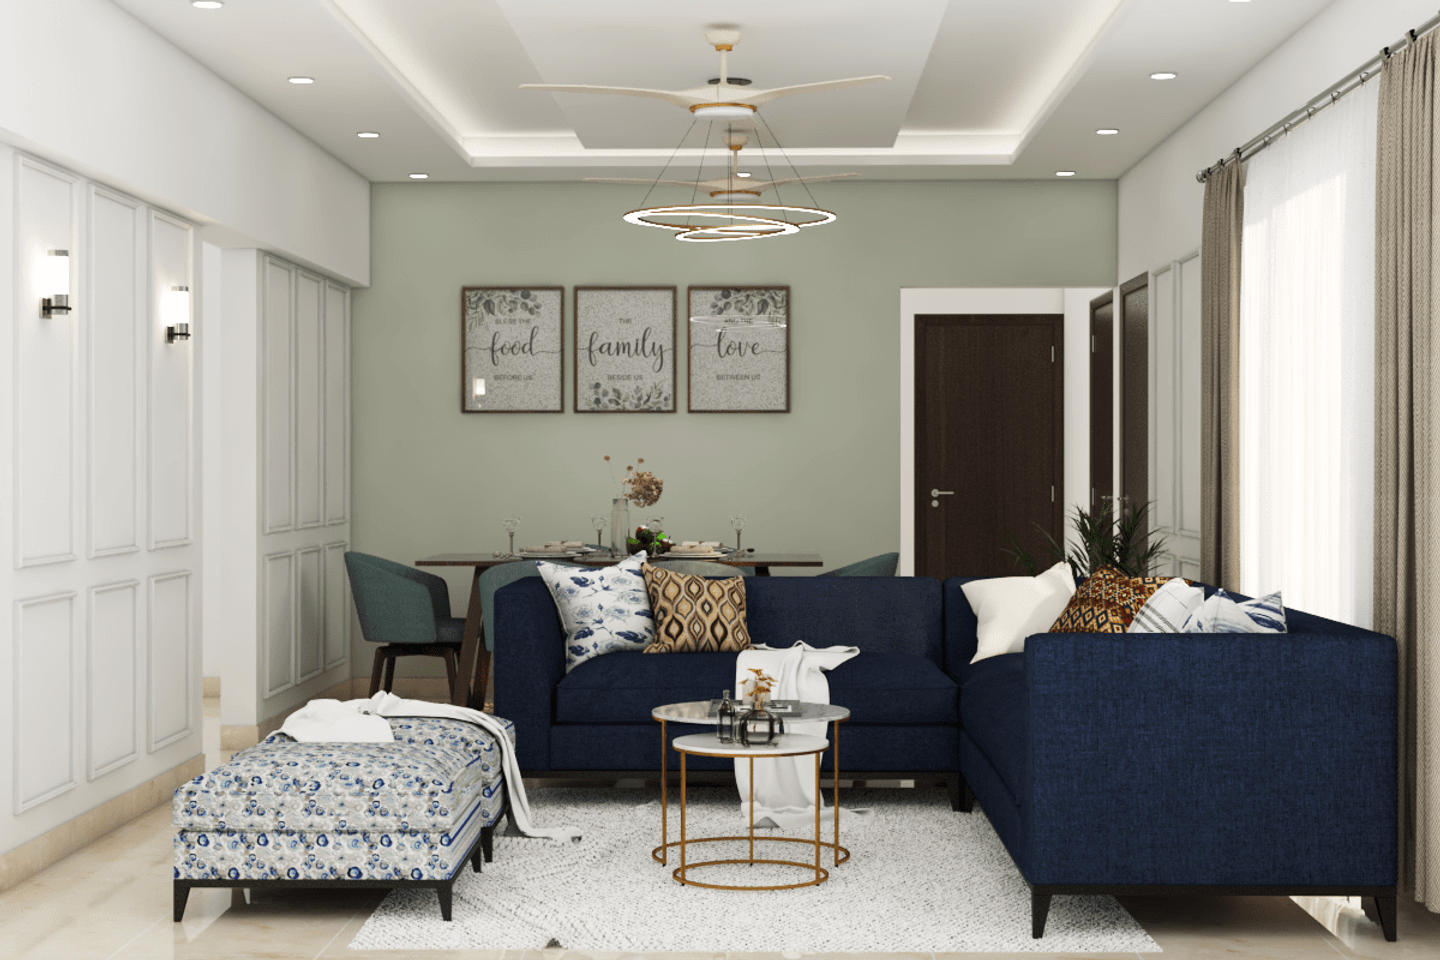 Living Room With Navy Blue Sofa - Livspace